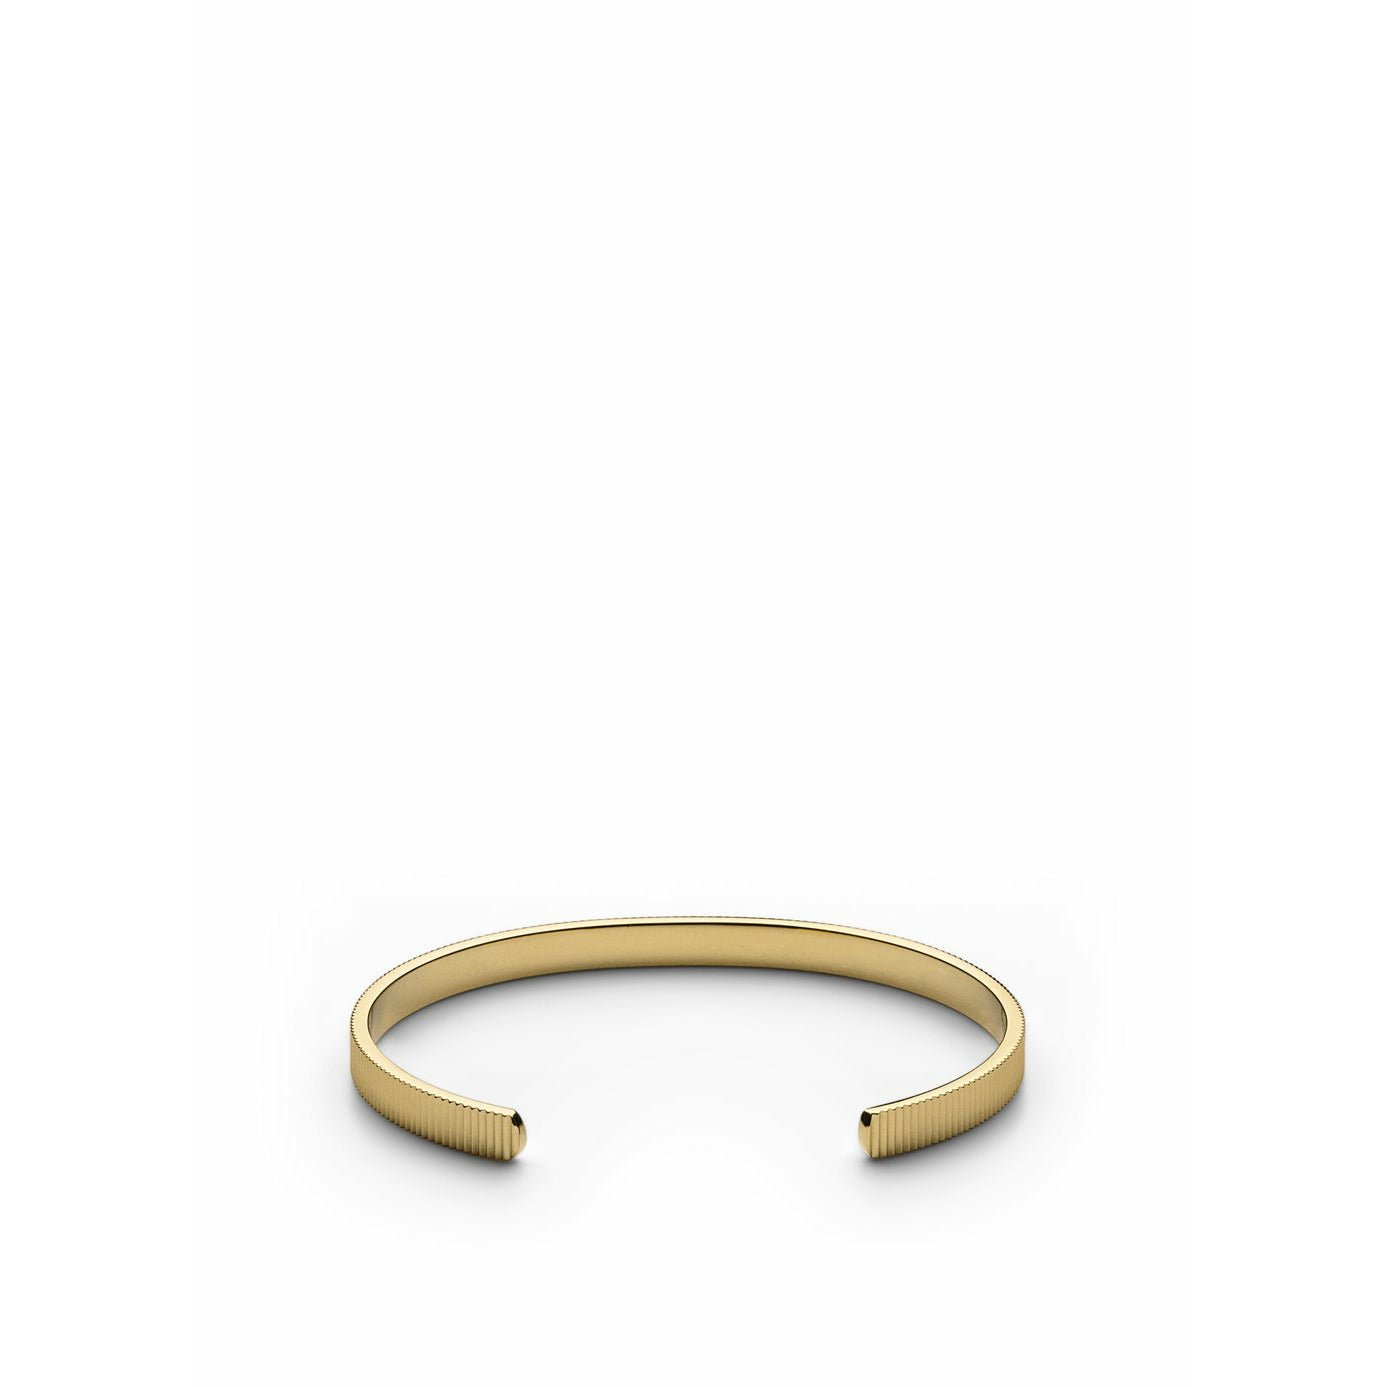 Skultuna geripptes dünnes Armband kleines Gold plattiert, Ø14,5 cm